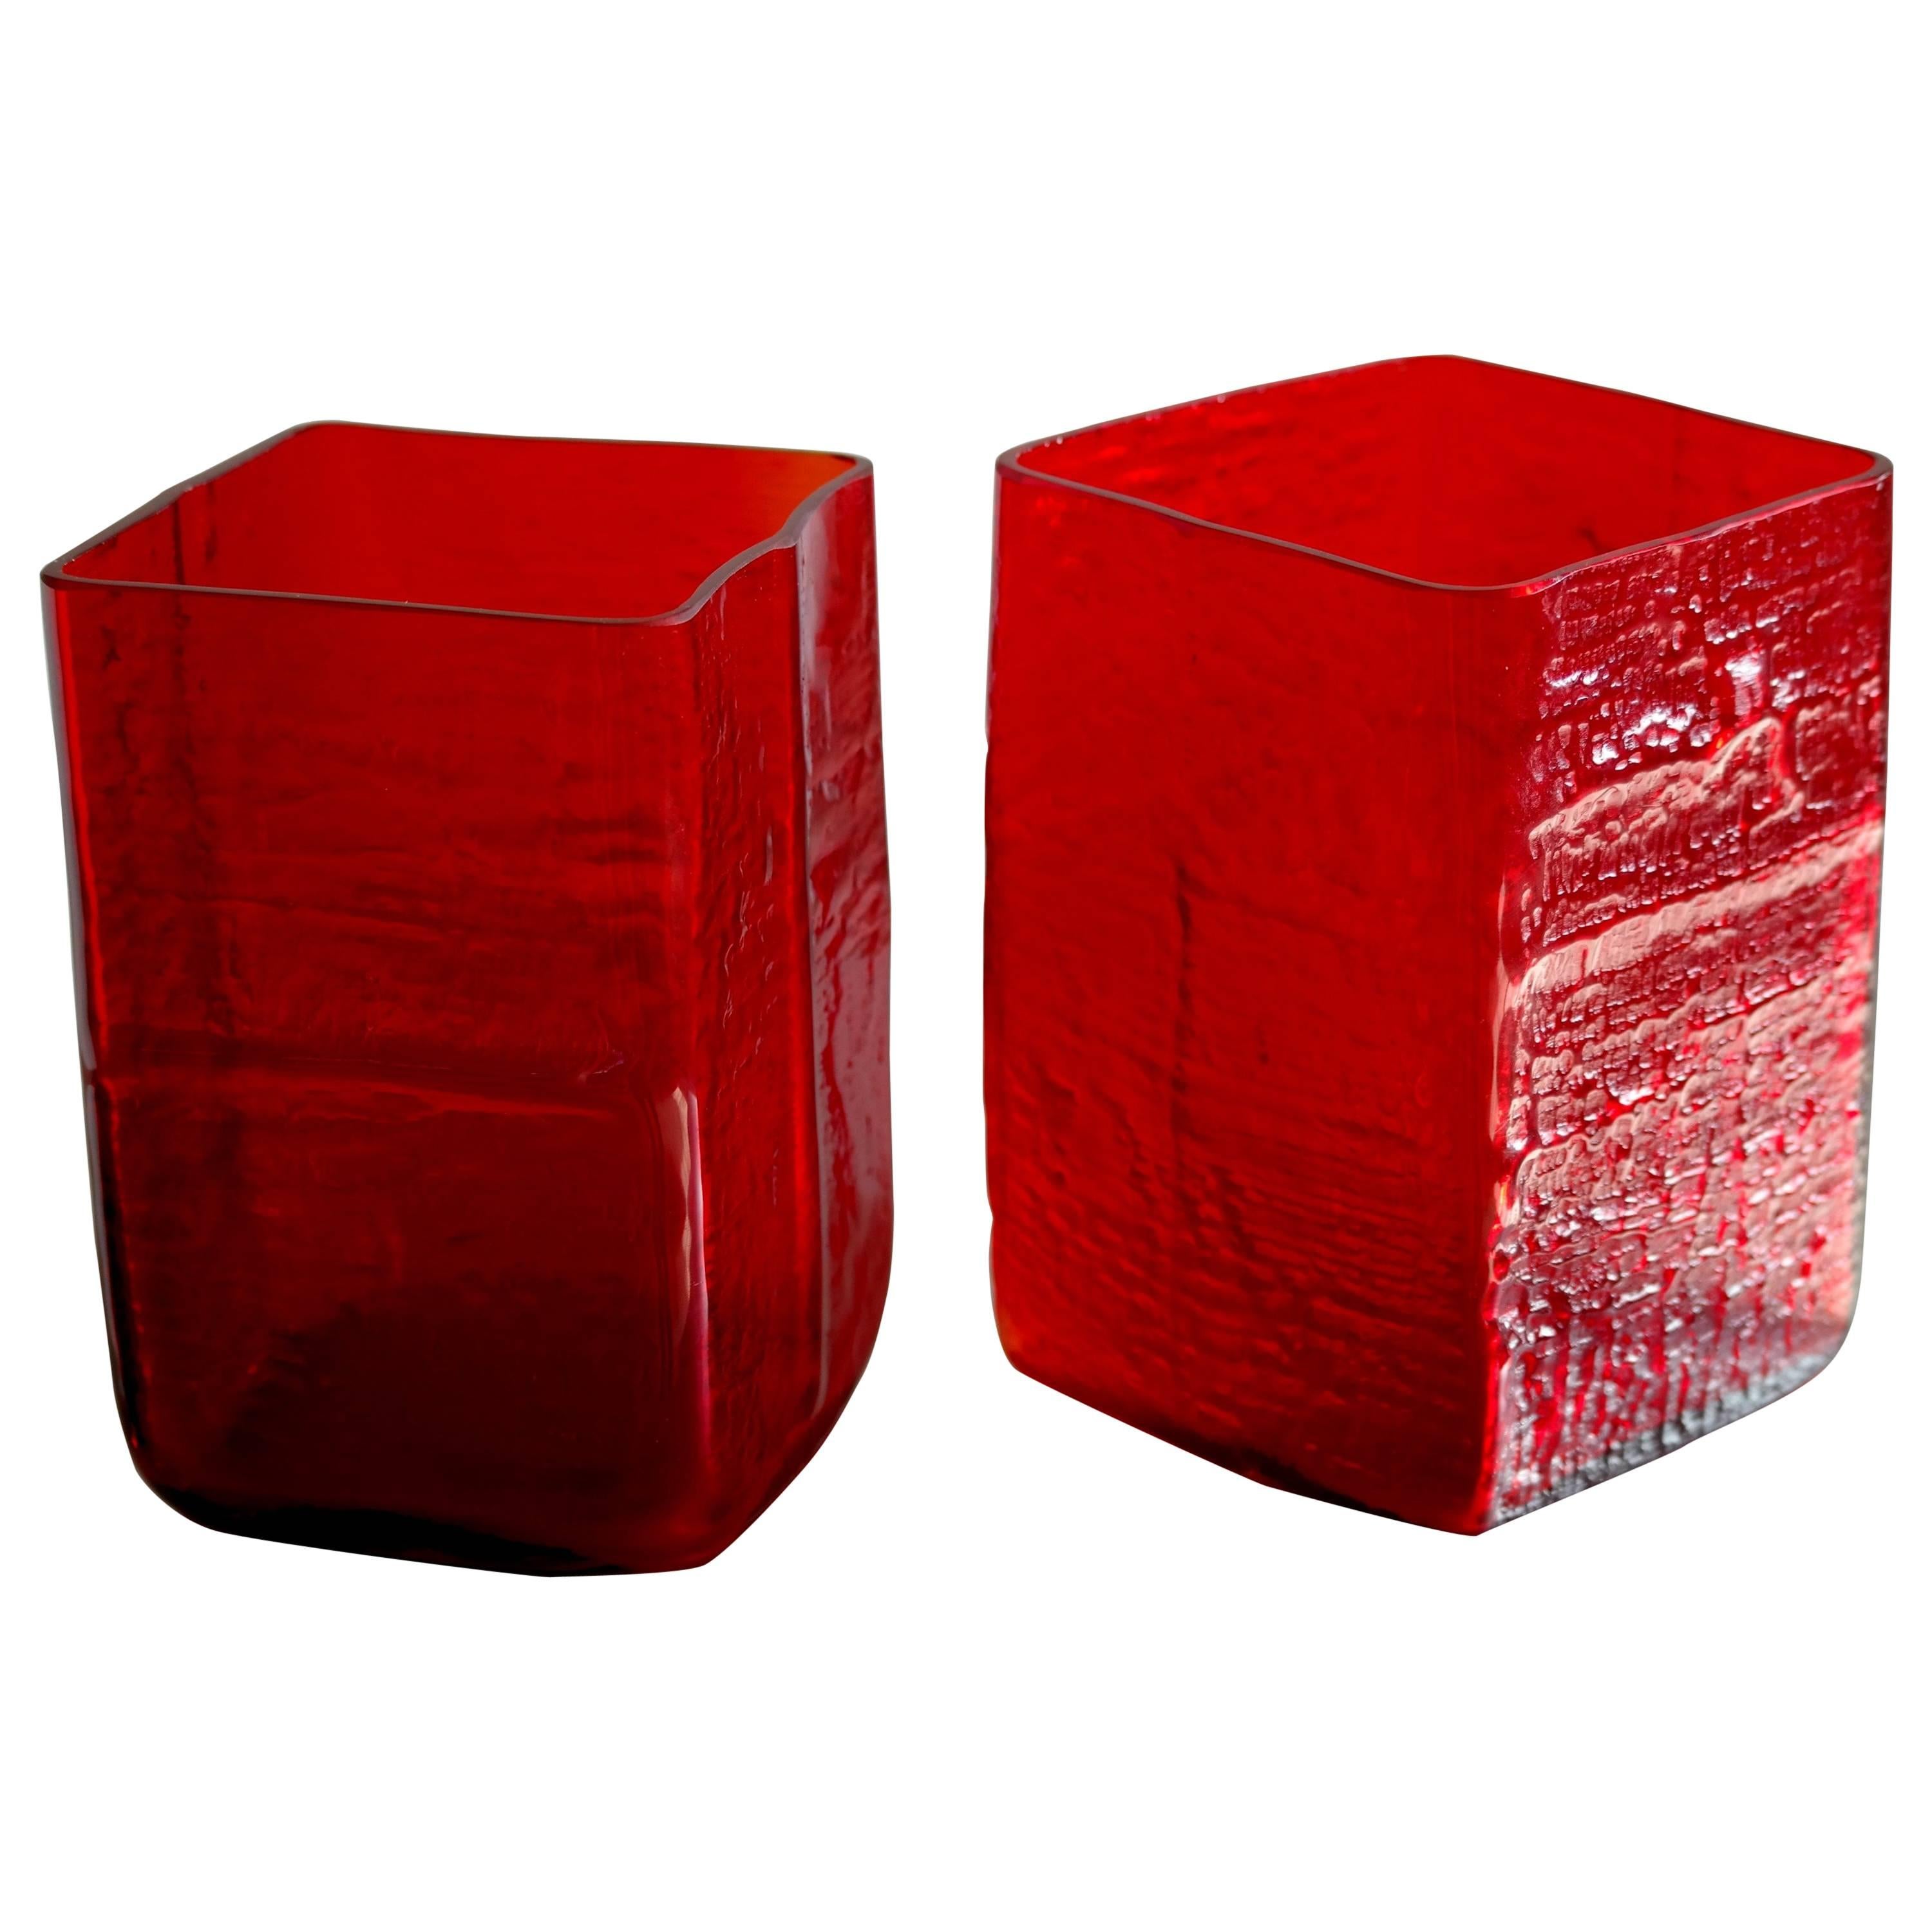 Per Lÿtken for Holmegaard Glasvaerk Red Glass Vases designed 